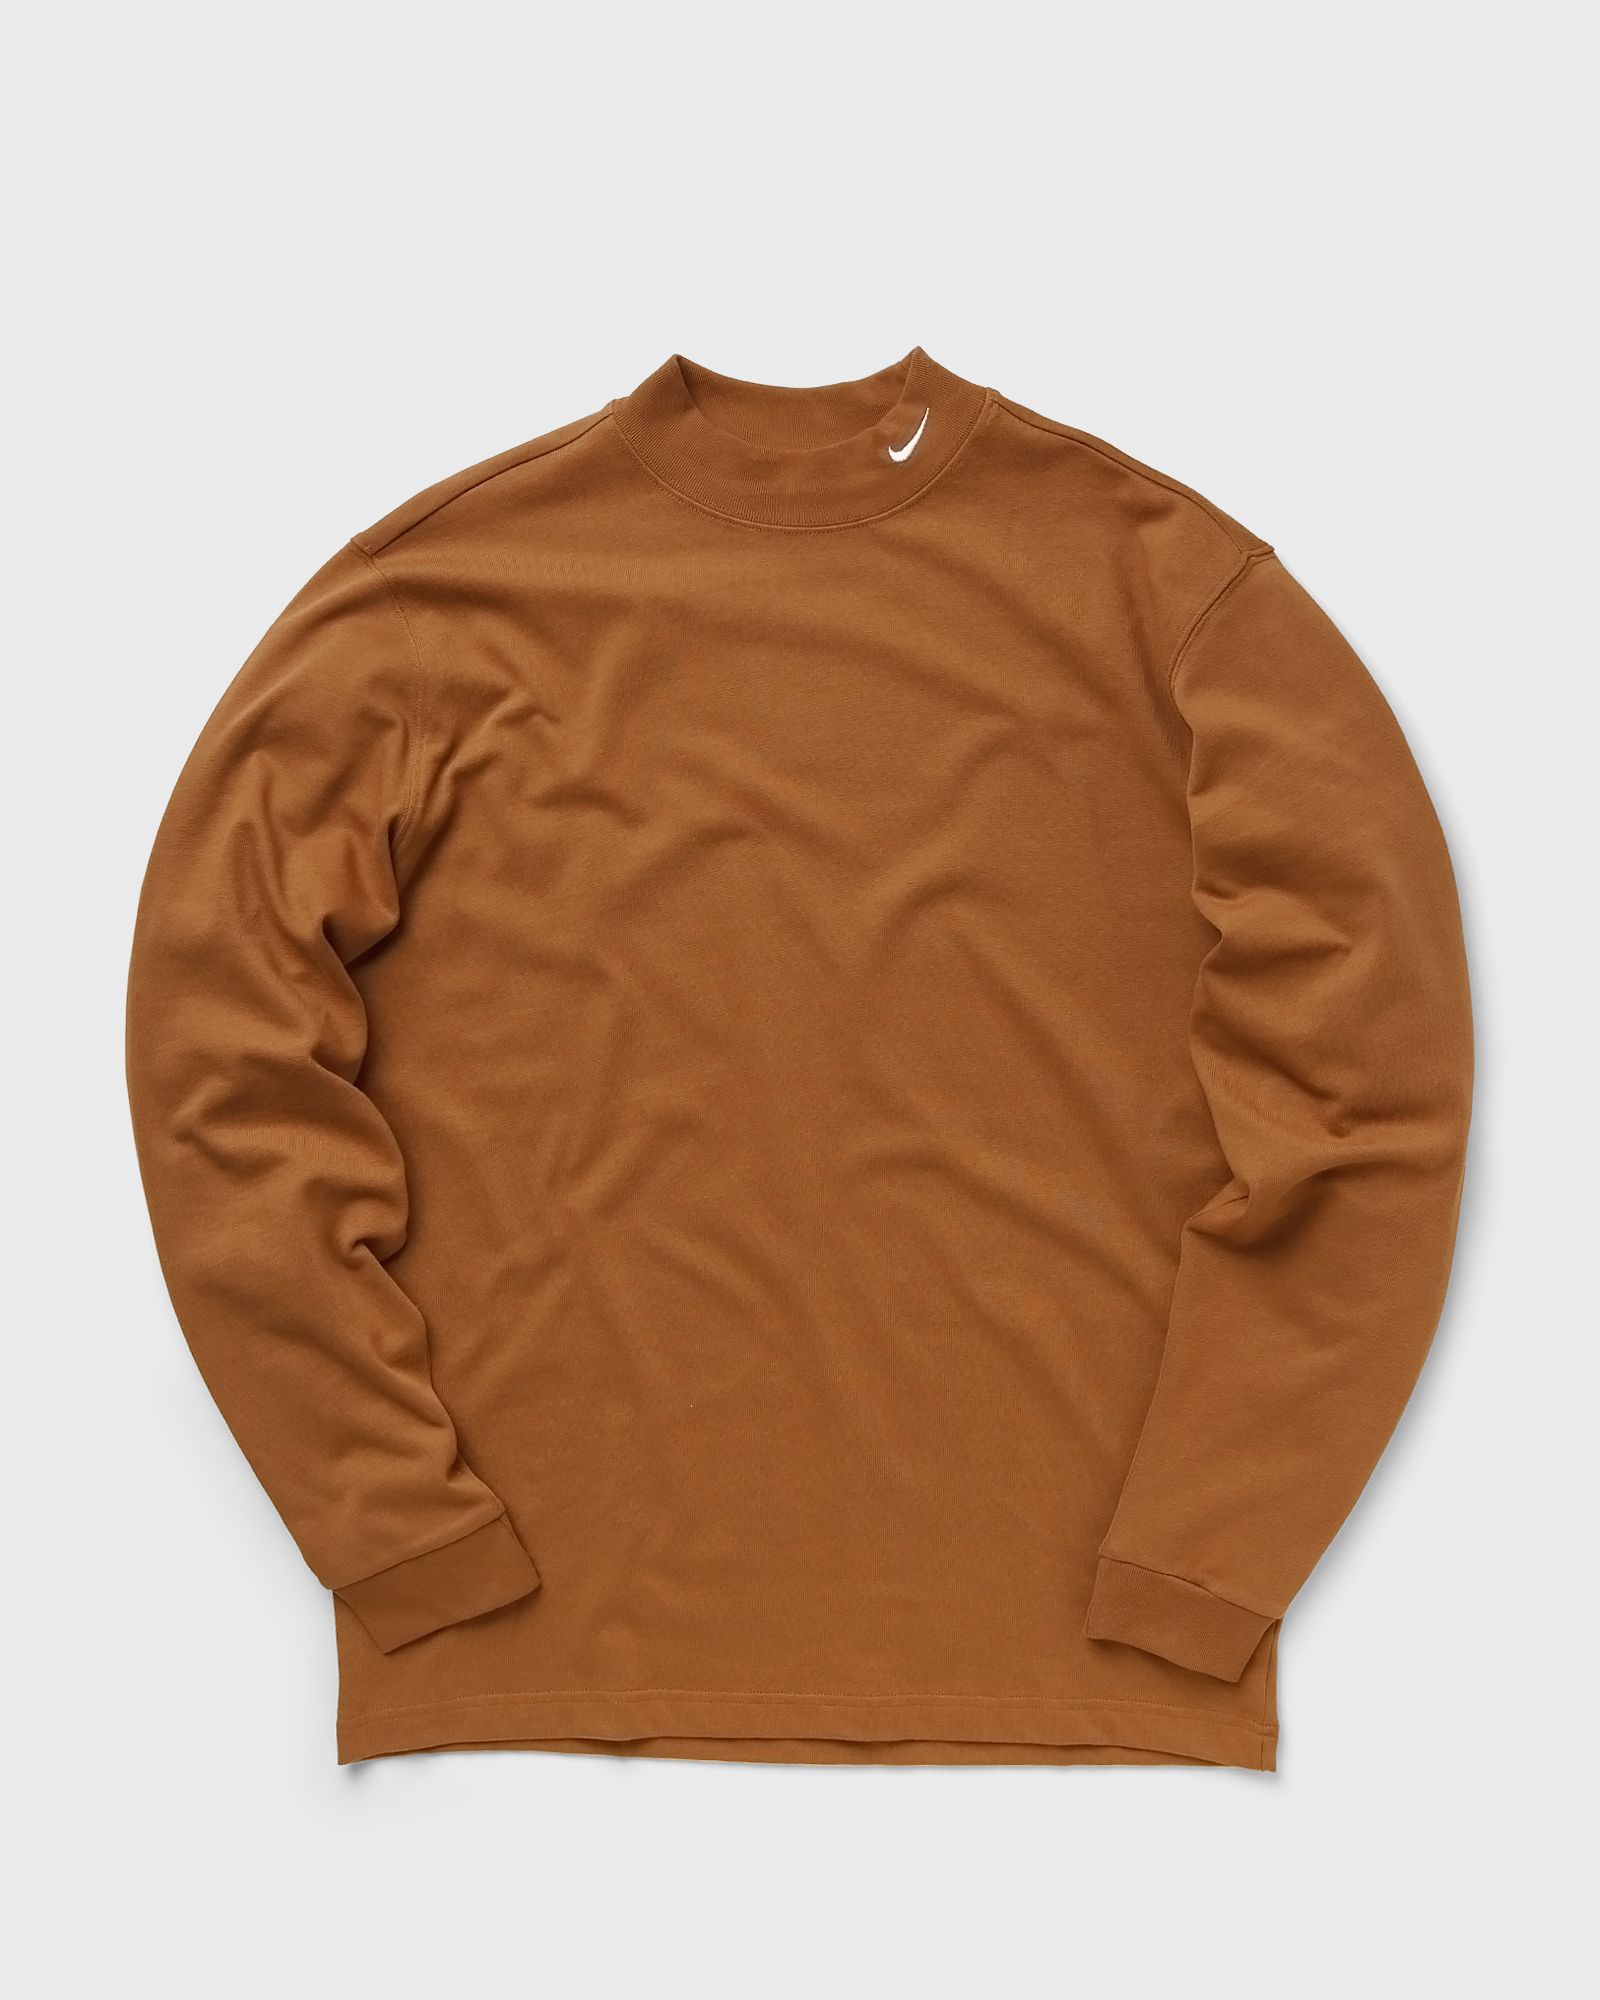 Nike - long-sleeve mock neck shirt men sweatshirts brown in größe:l